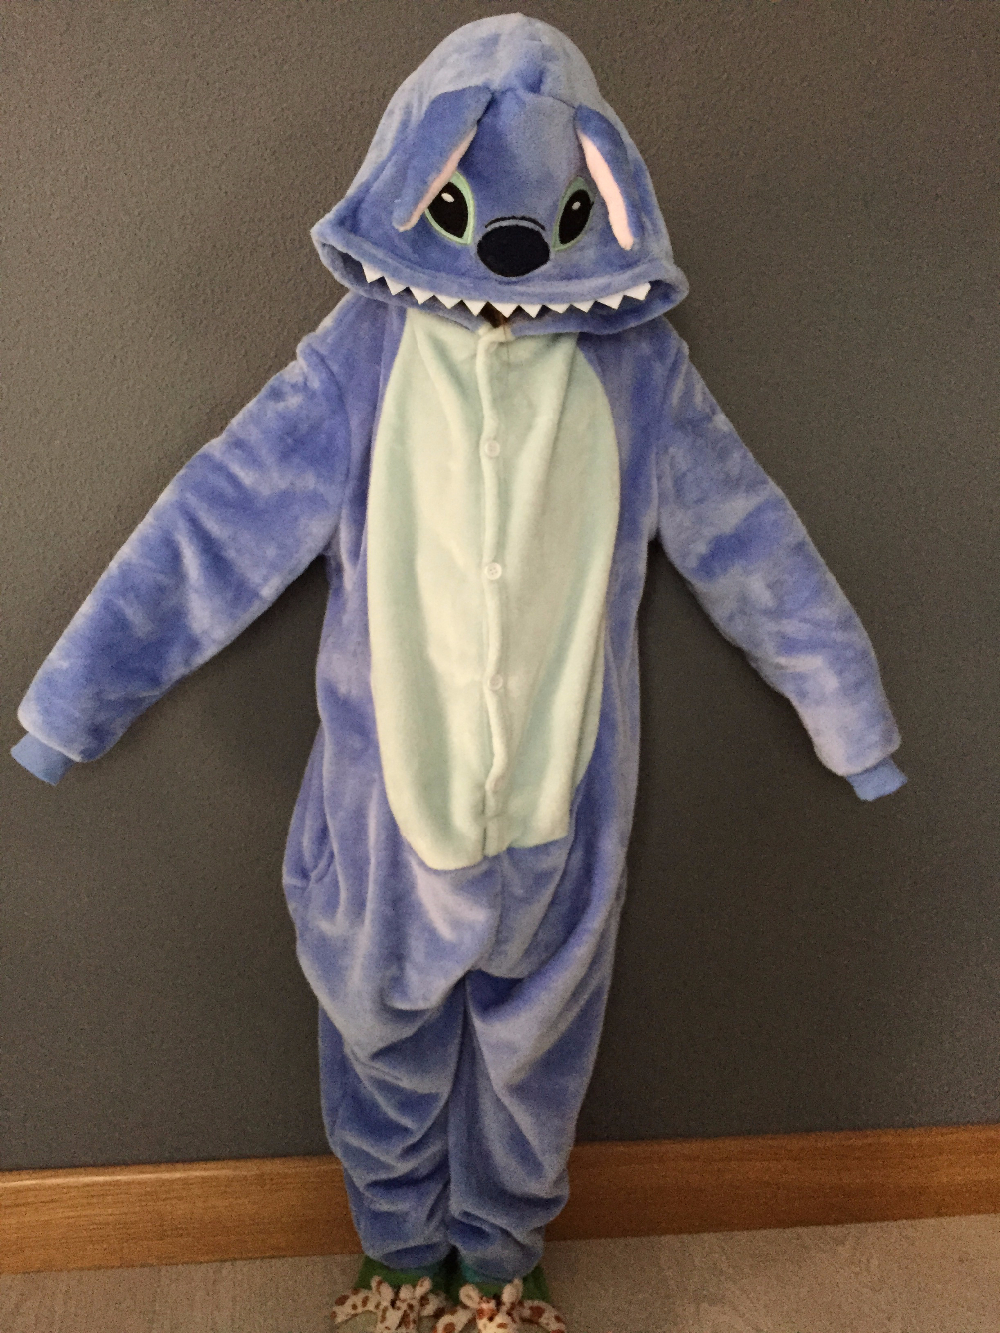 Free Shipping Blue And Pink Stitch Cosplay Anime Animal Pajamas Costume Kids Winter Home Loungewear